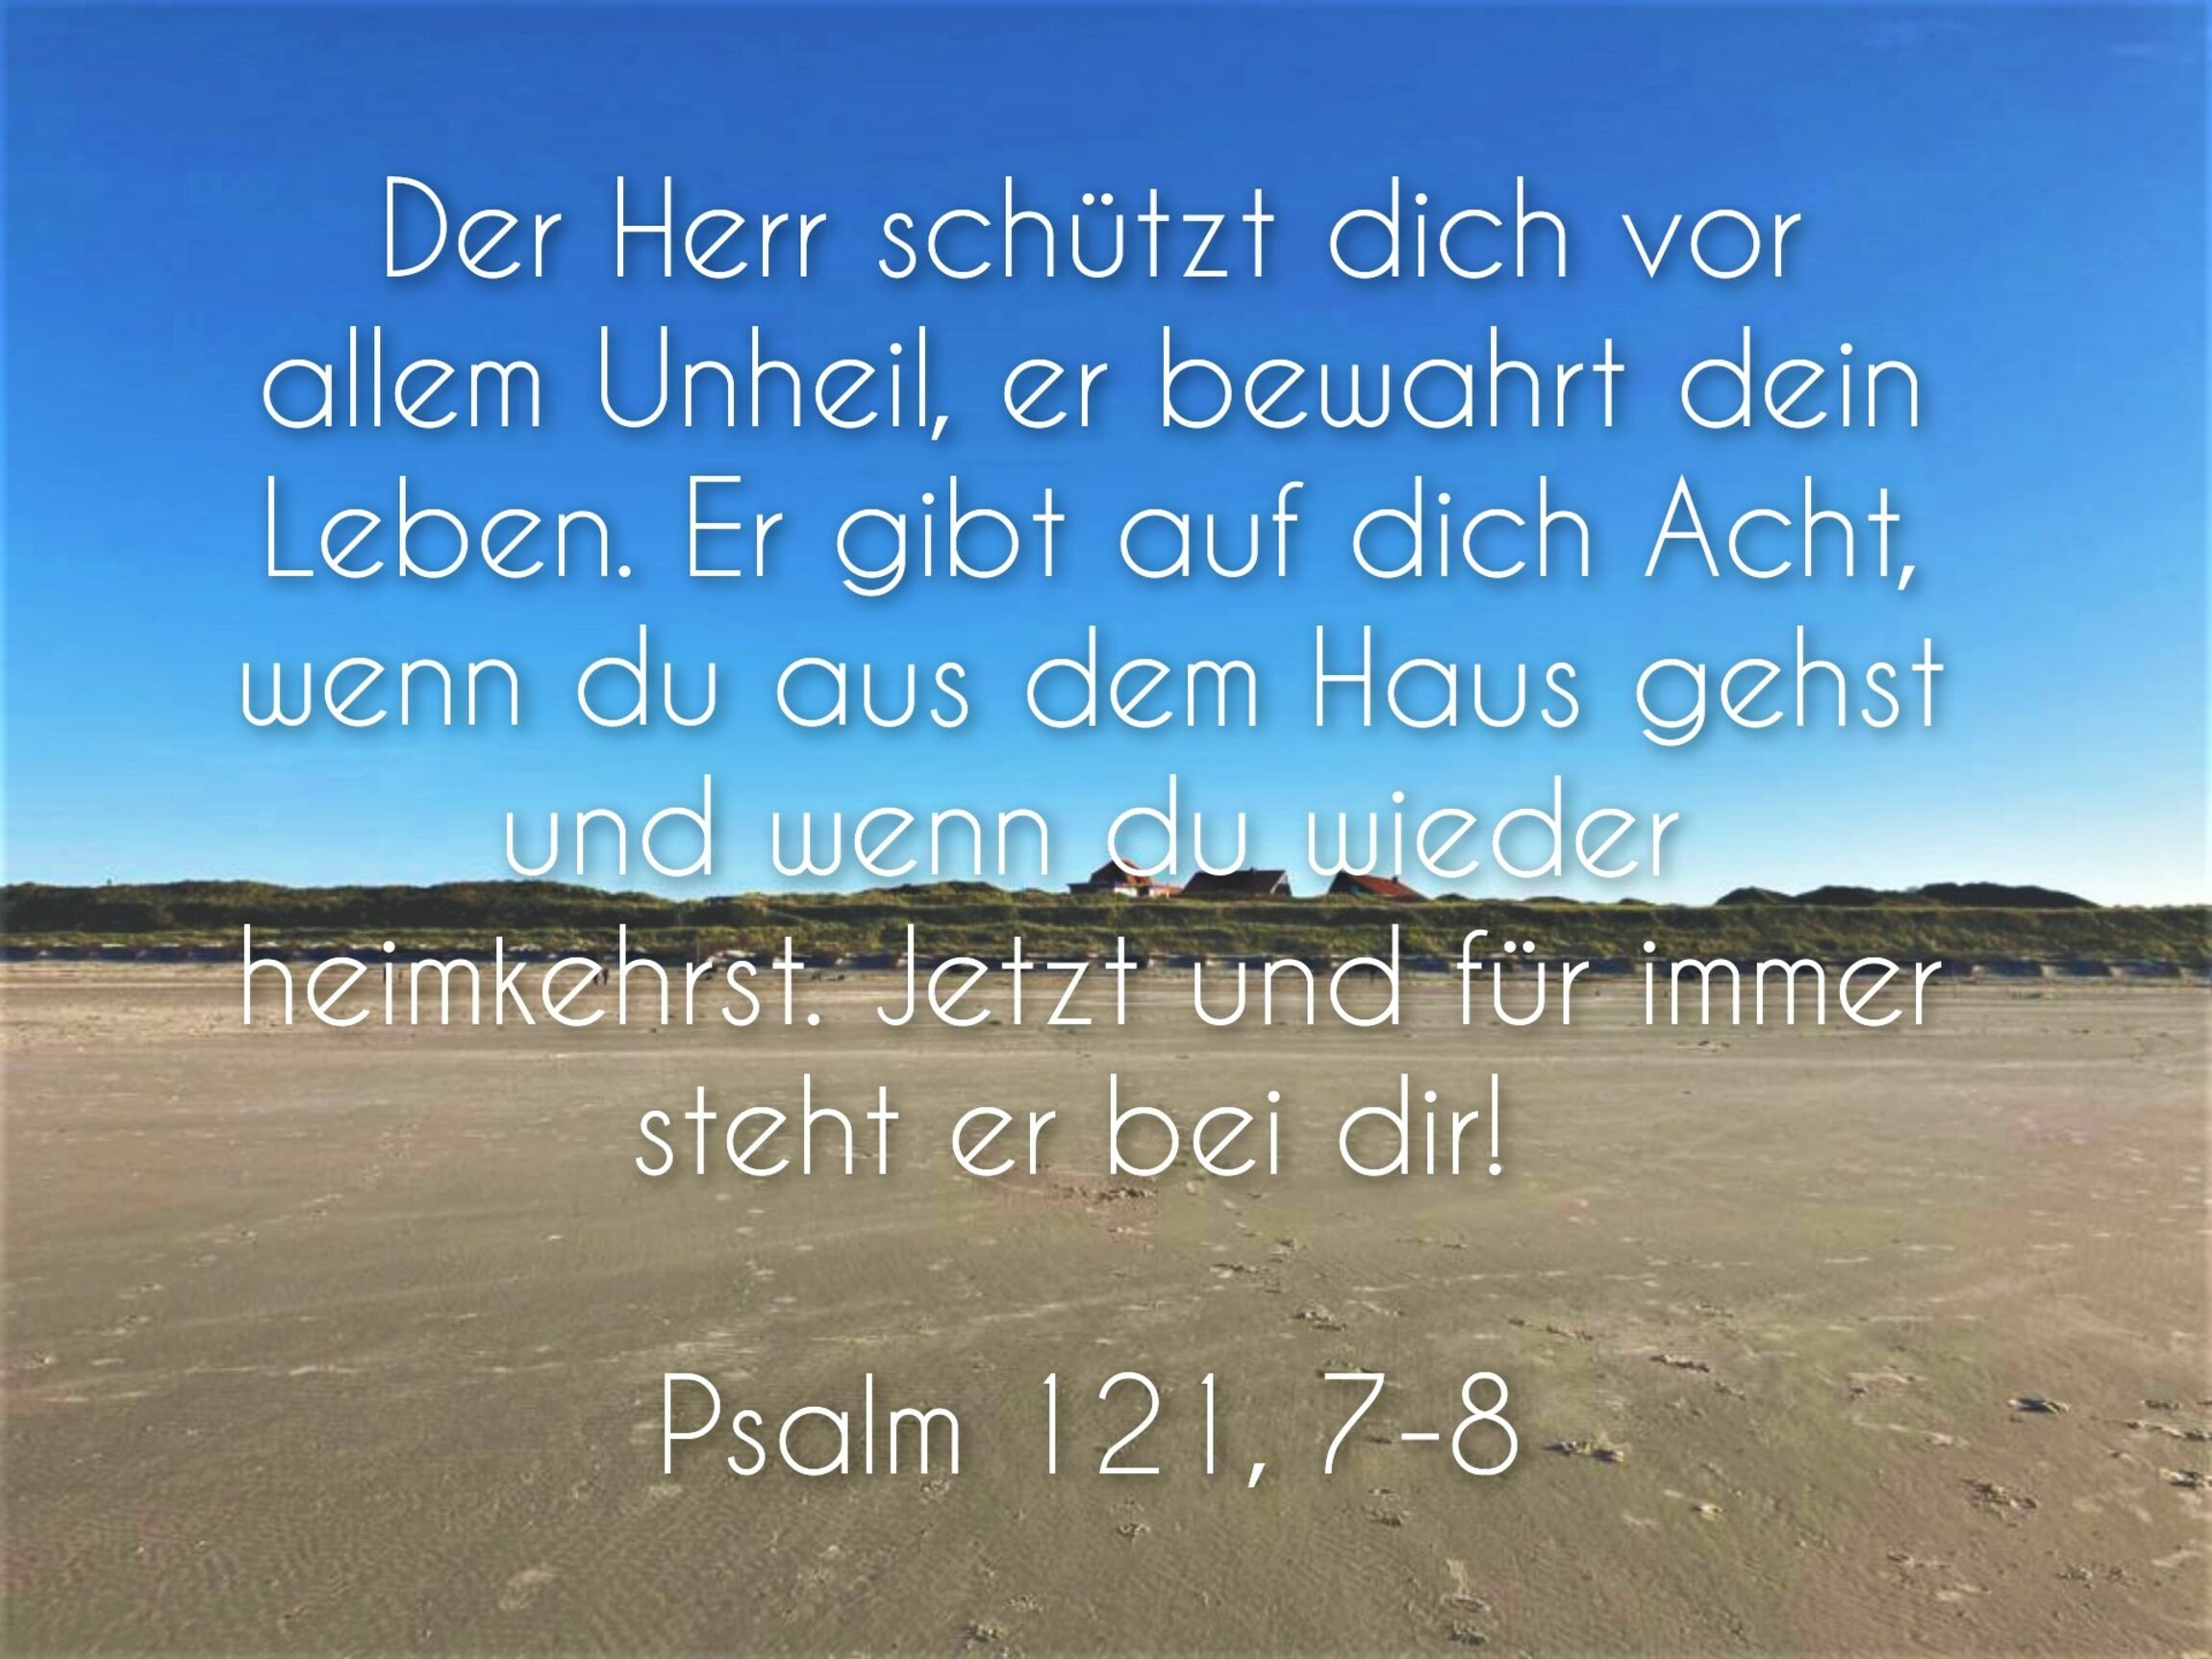 Psalm 121, 7-8